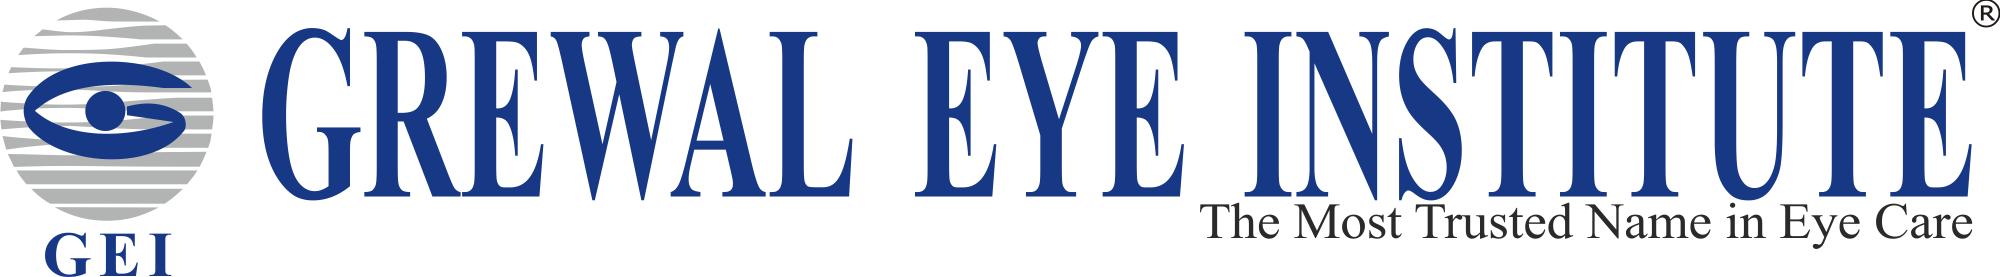 Grewal eye institute logo